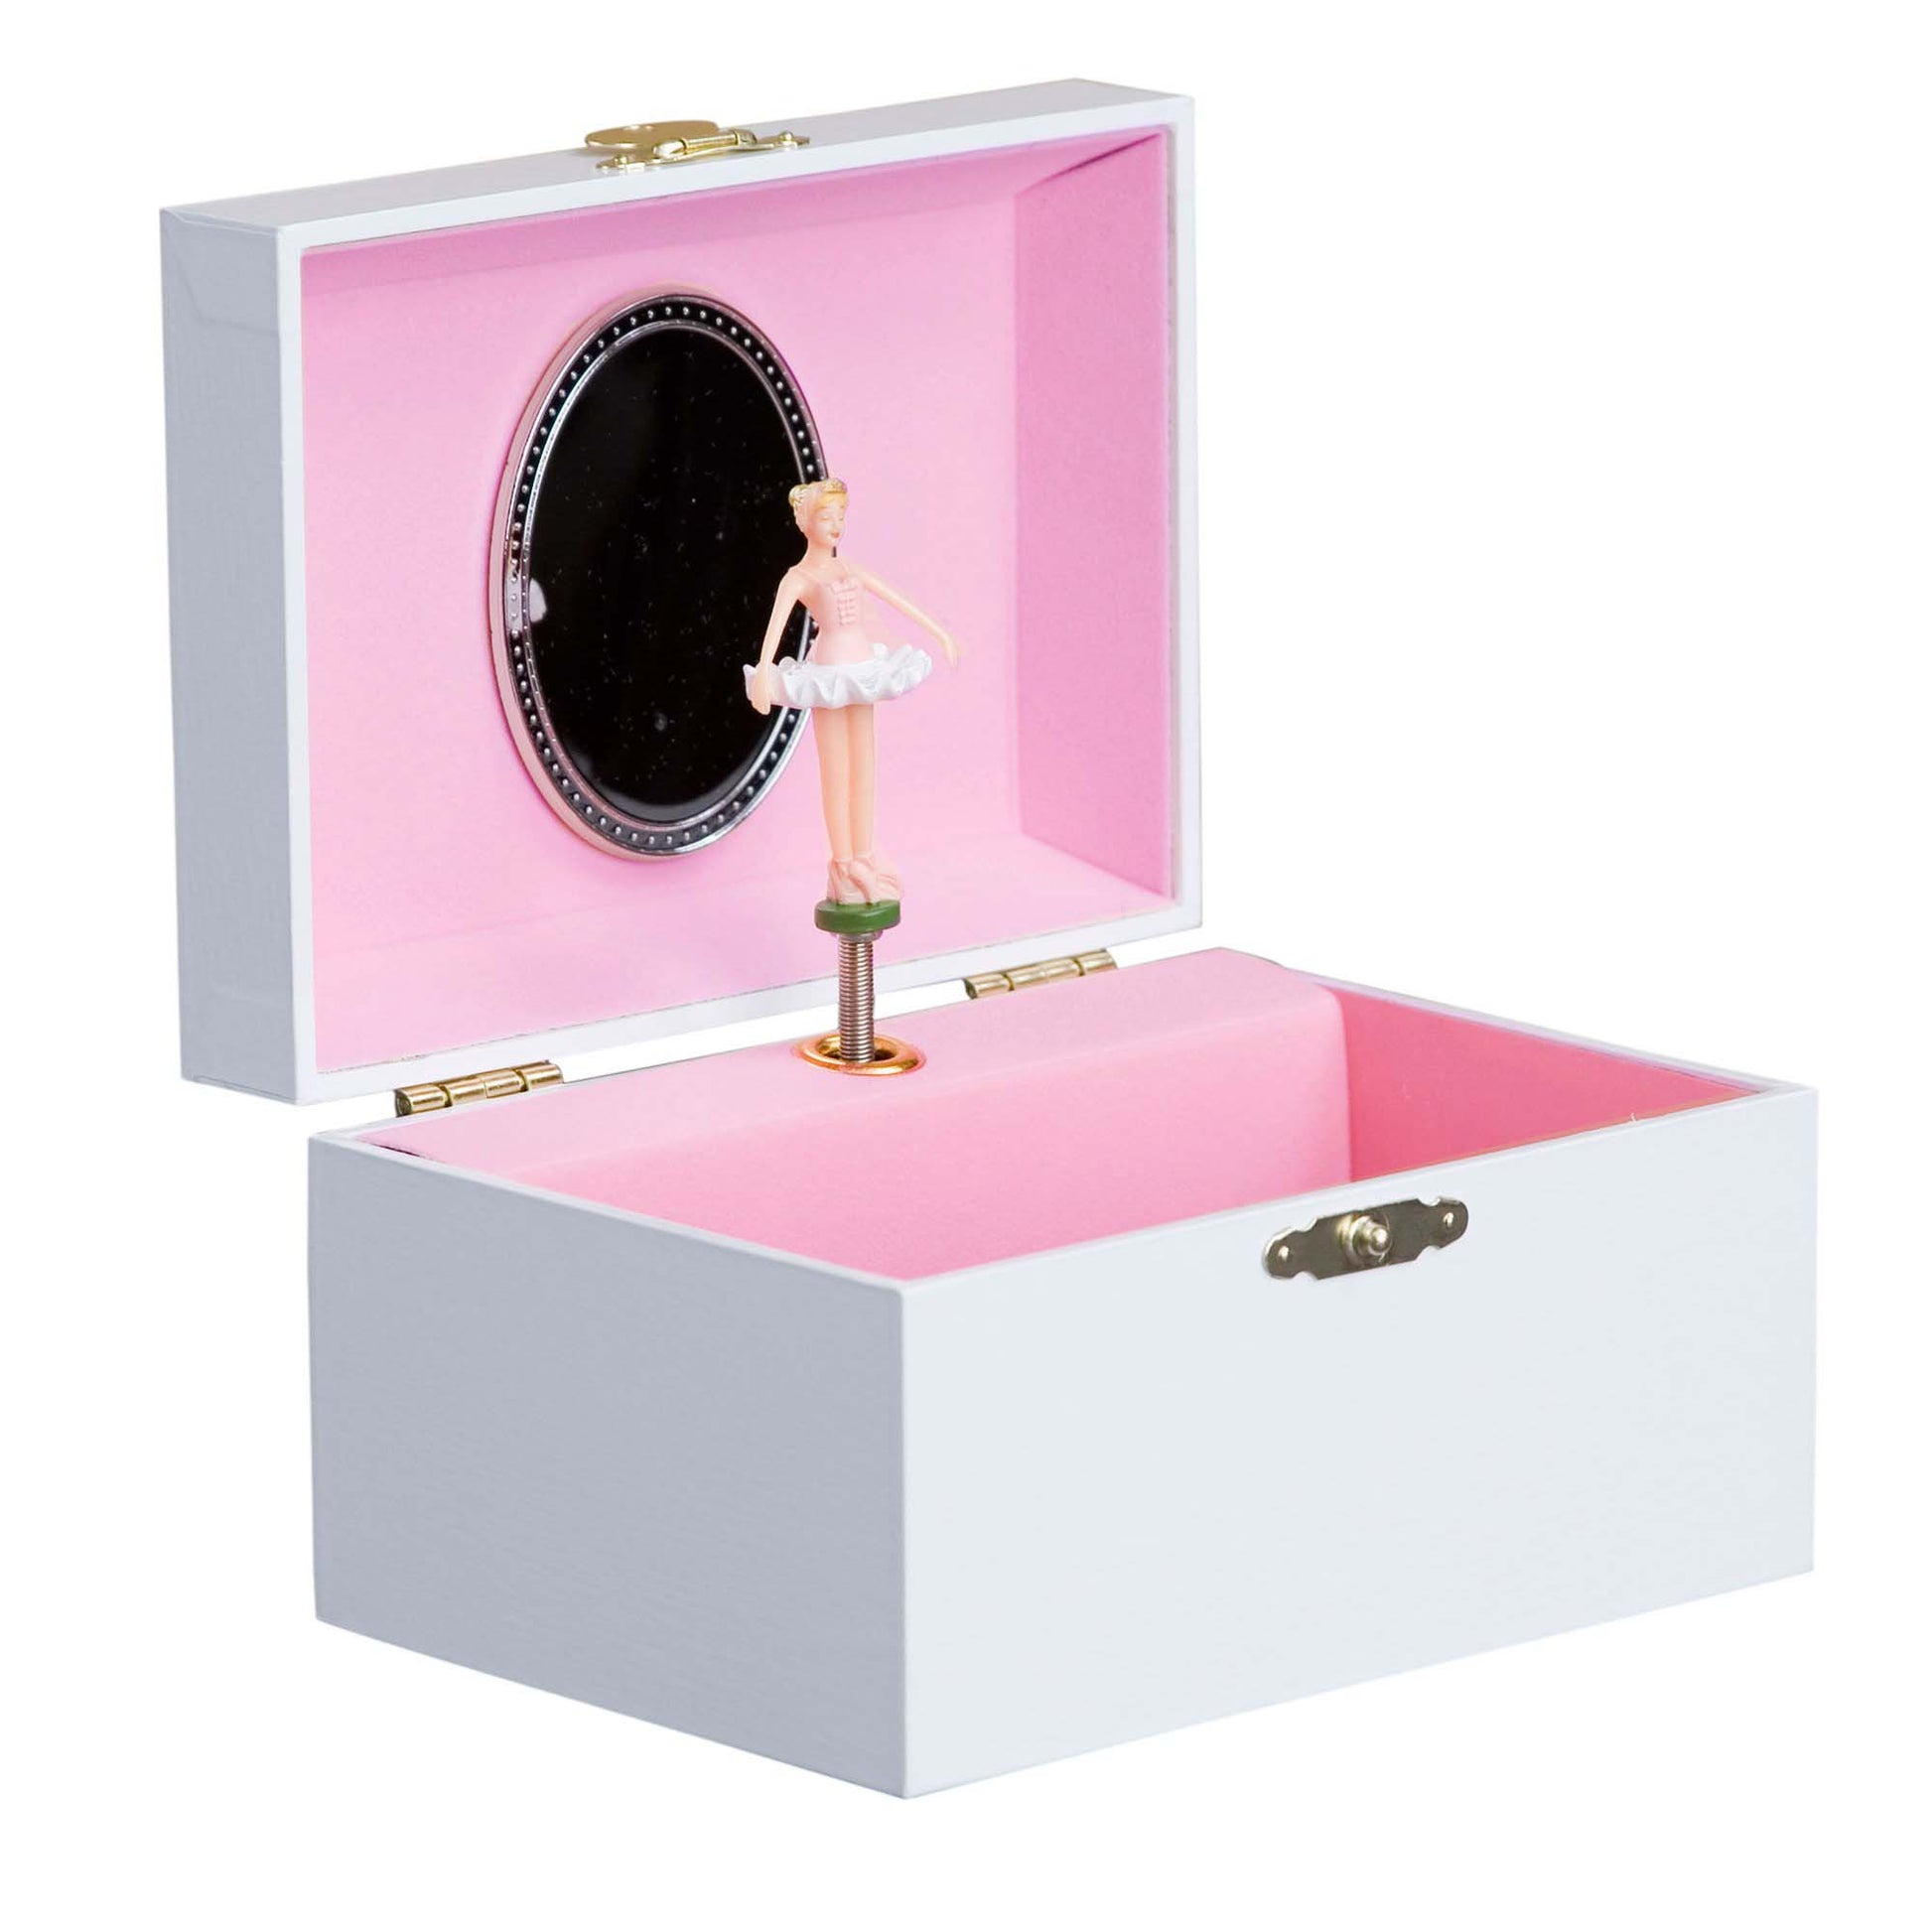 Personalized Musical ItÃƒÂ¢Ã¢â€šÂ¬Ã¢â€žÂ¢s a small world Ballerina Jewelry Box